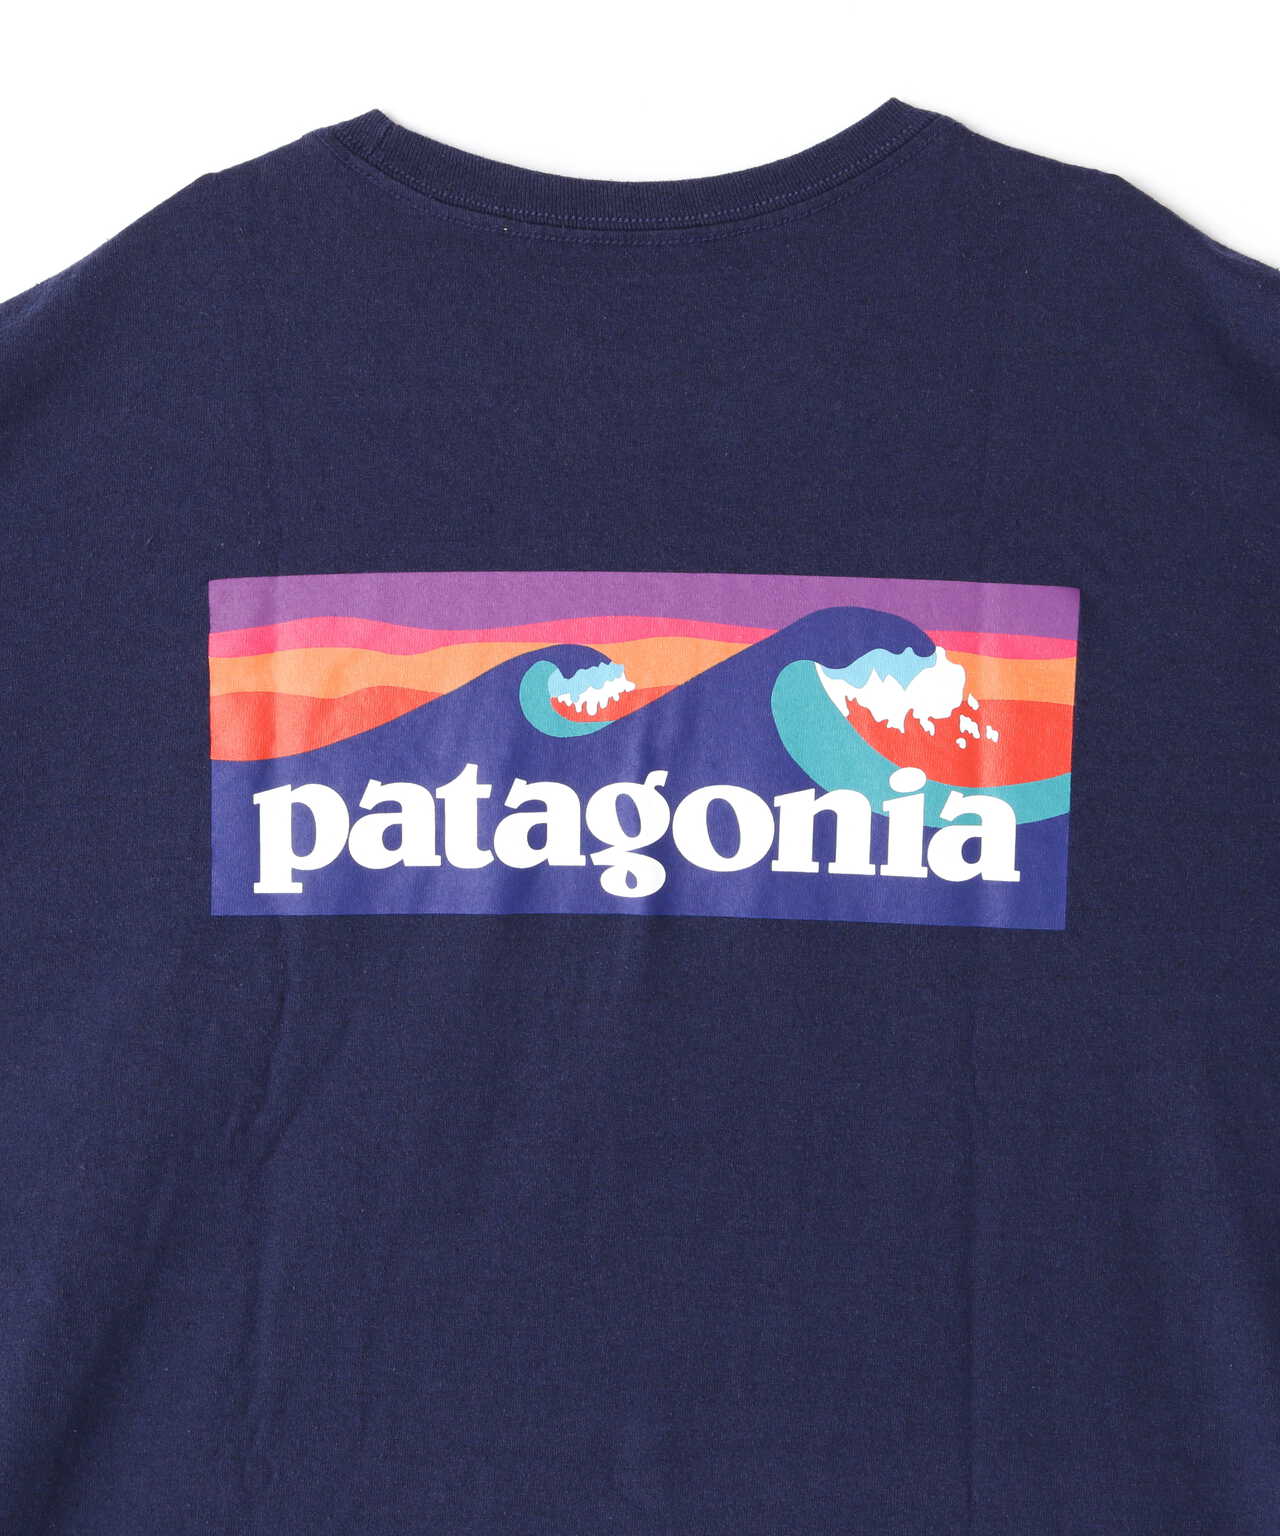 Patagonia/パタゴニア メンズ・ボードショーツ・ロゴ・ポケット 